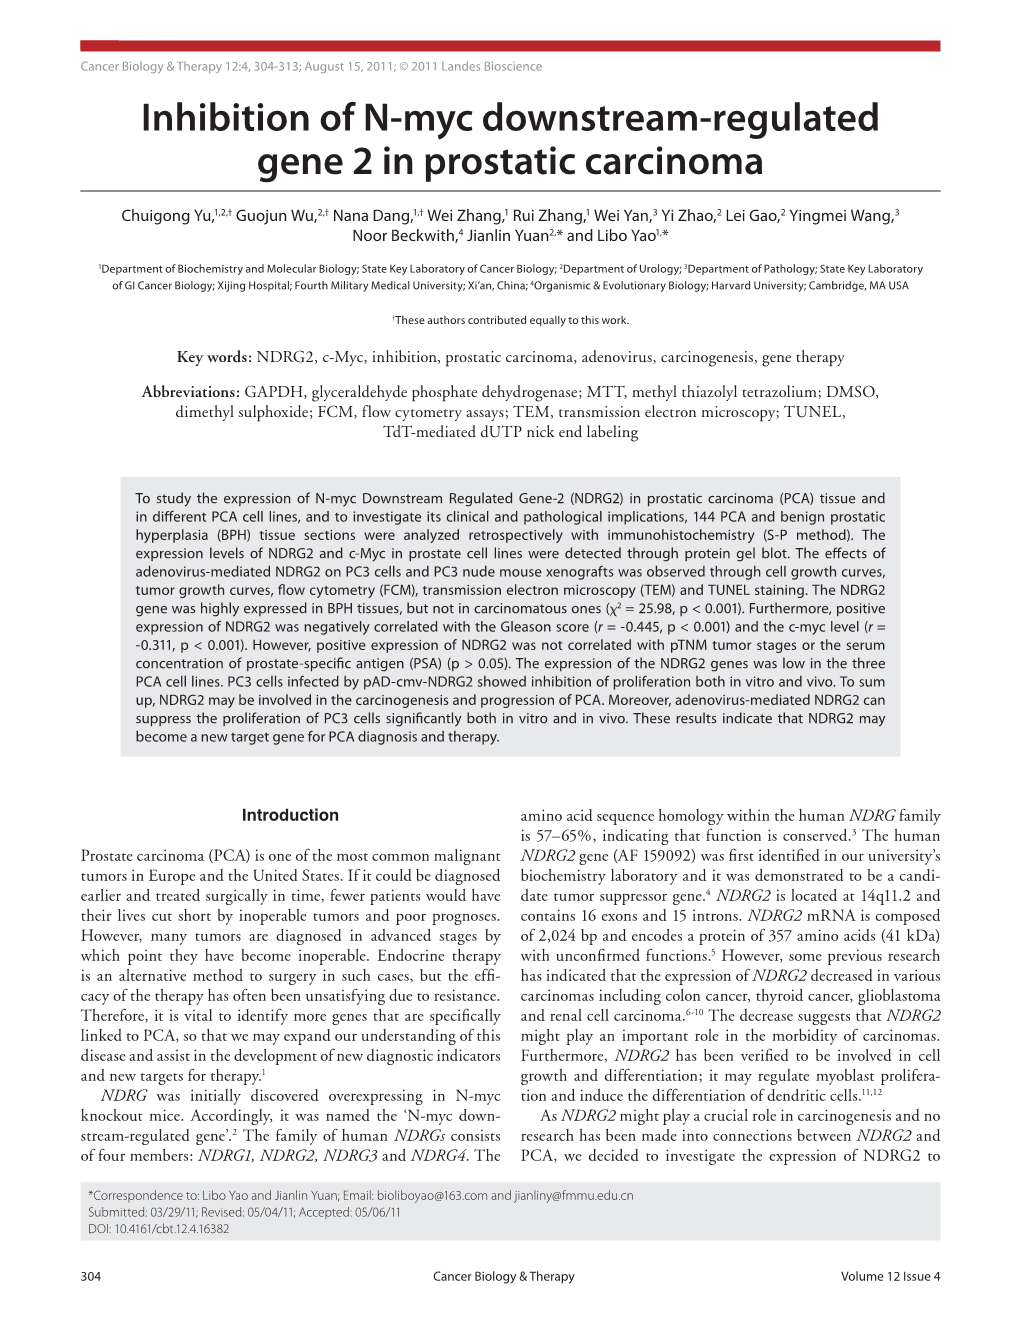 Inhibition of N-Myc Downstream-Regulated Gene 2 in Prostatic Carcinoma